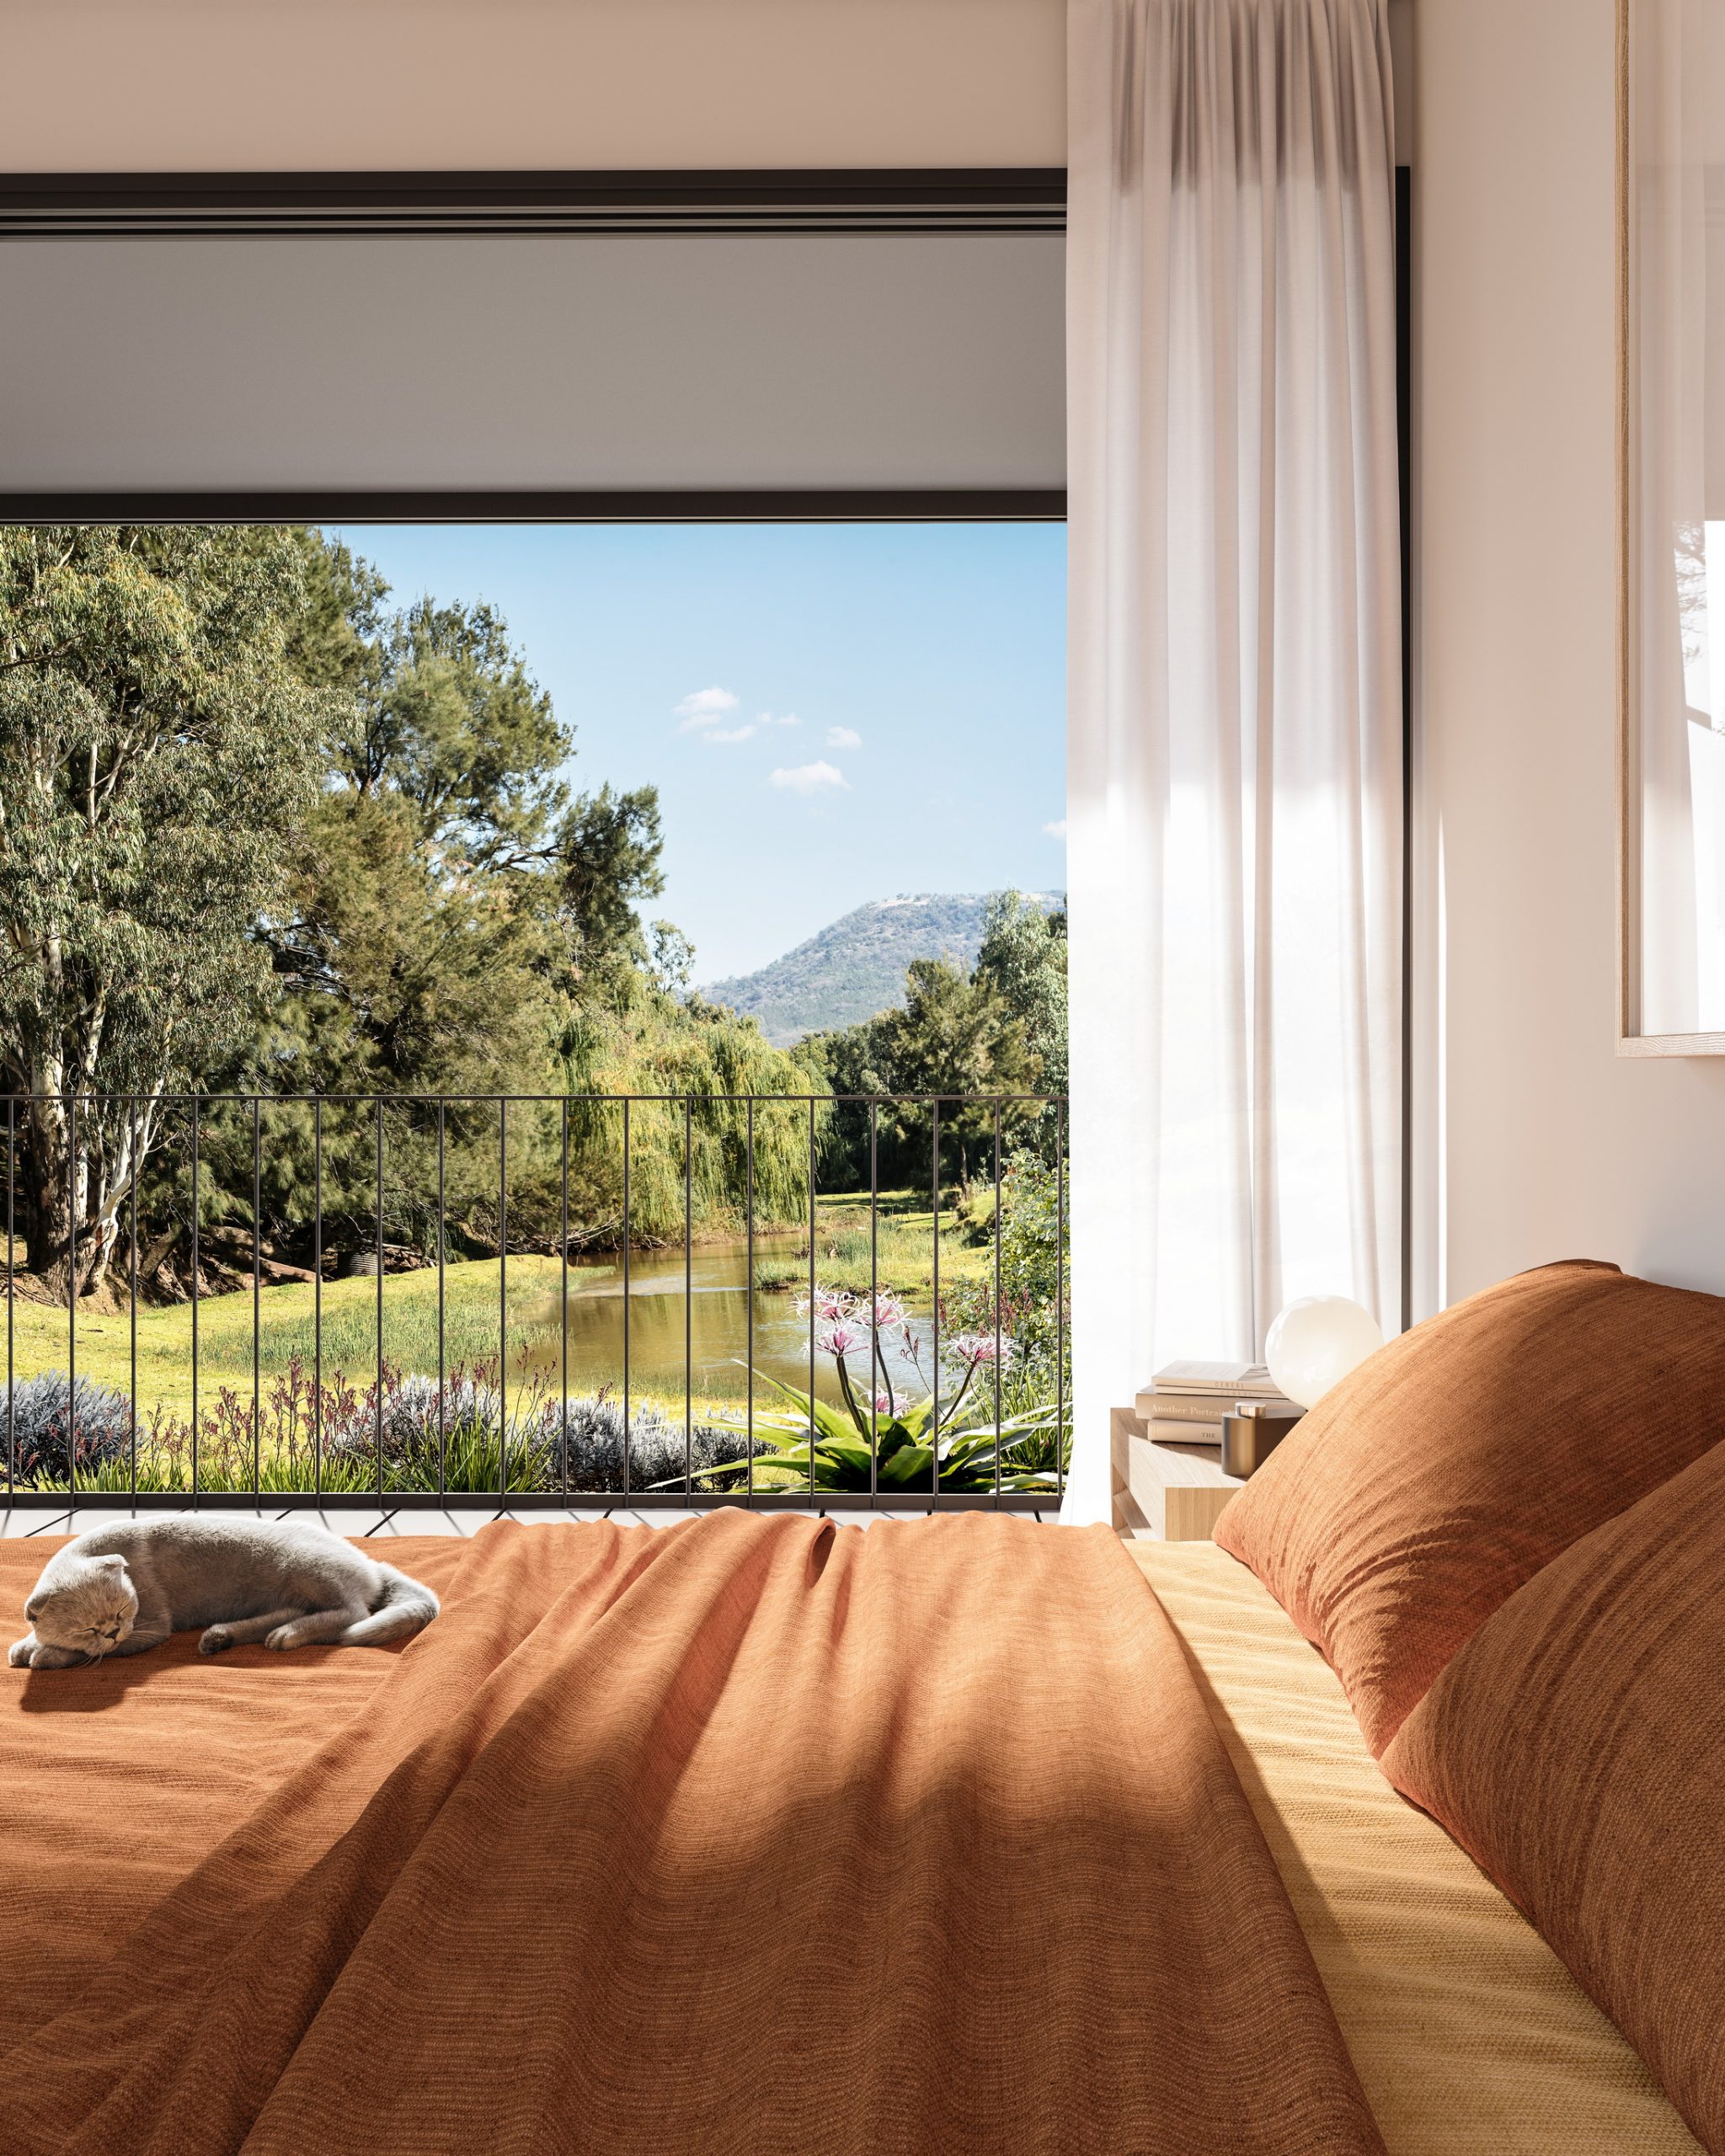 Fortis-house-exterior-image-prefab-architecture-clear-day-image-render-3d-visualisation-archviz-bushfire-bedroom